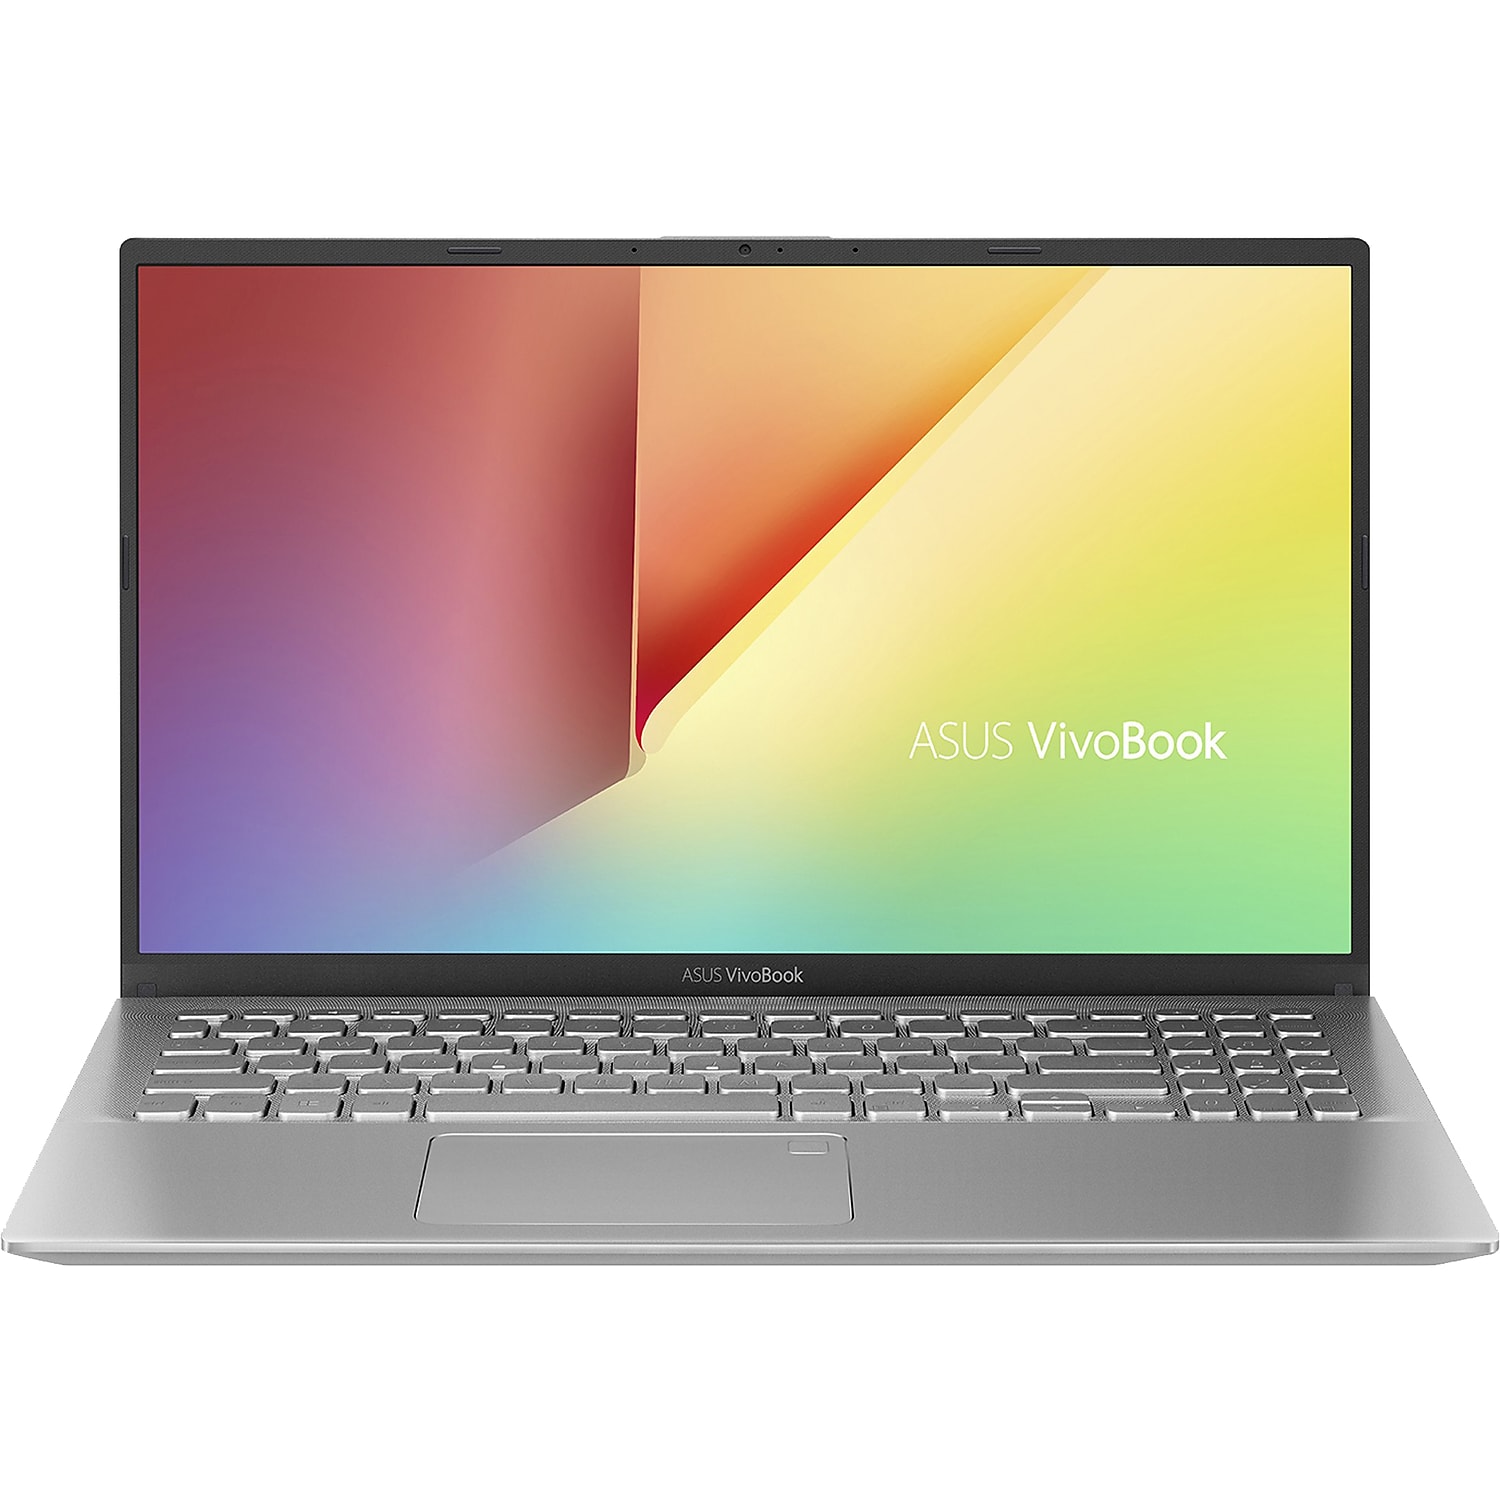 Staples B&M - Asus Vivobook laptop: 15.6” full HD, i3, 128 gb NVME, 4 gb RAM. $239.99 YMMV